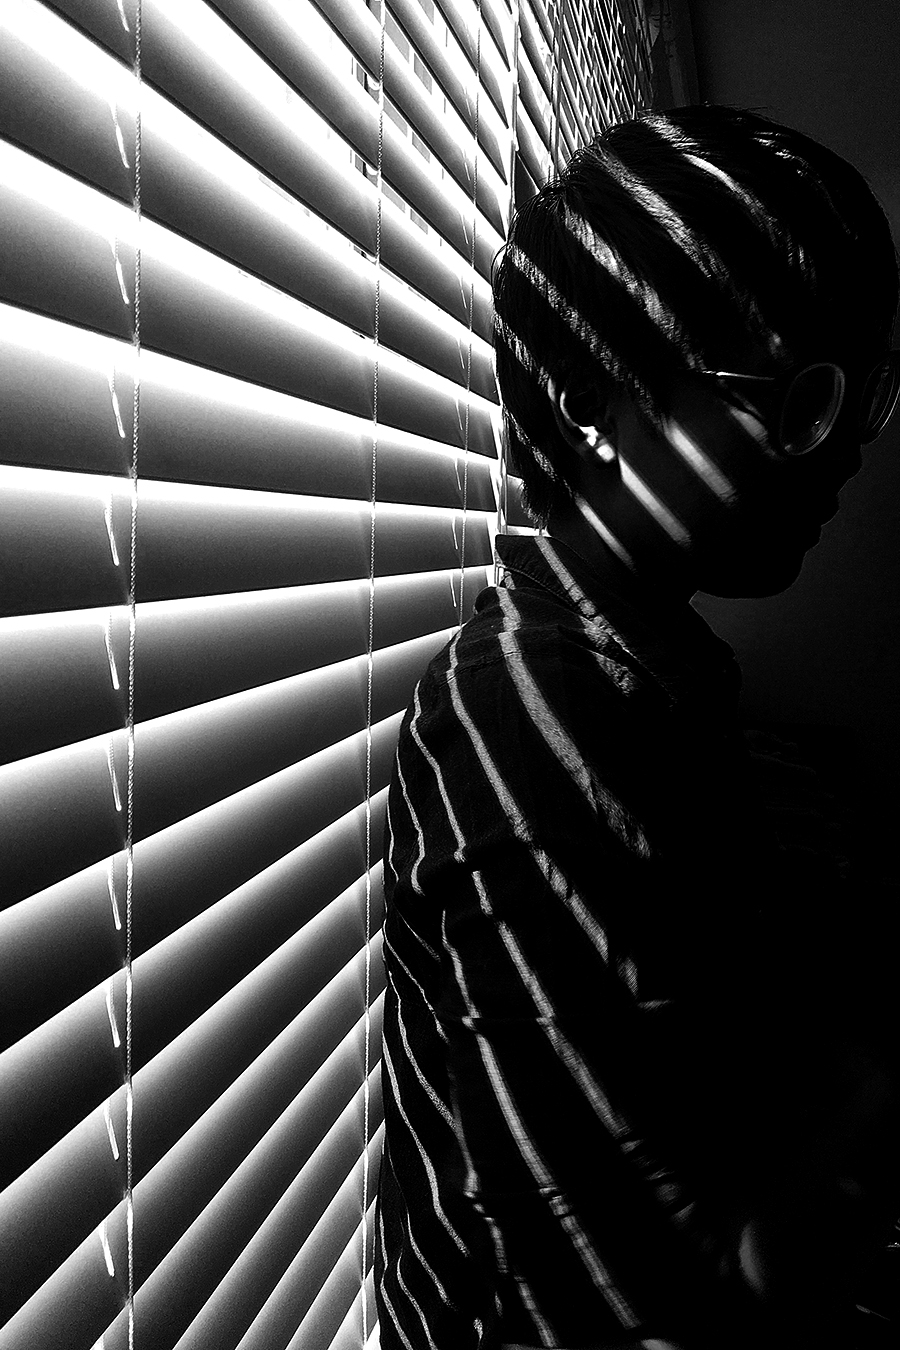 Linda_Ruan_light_through_the_window_shades_black_and_white